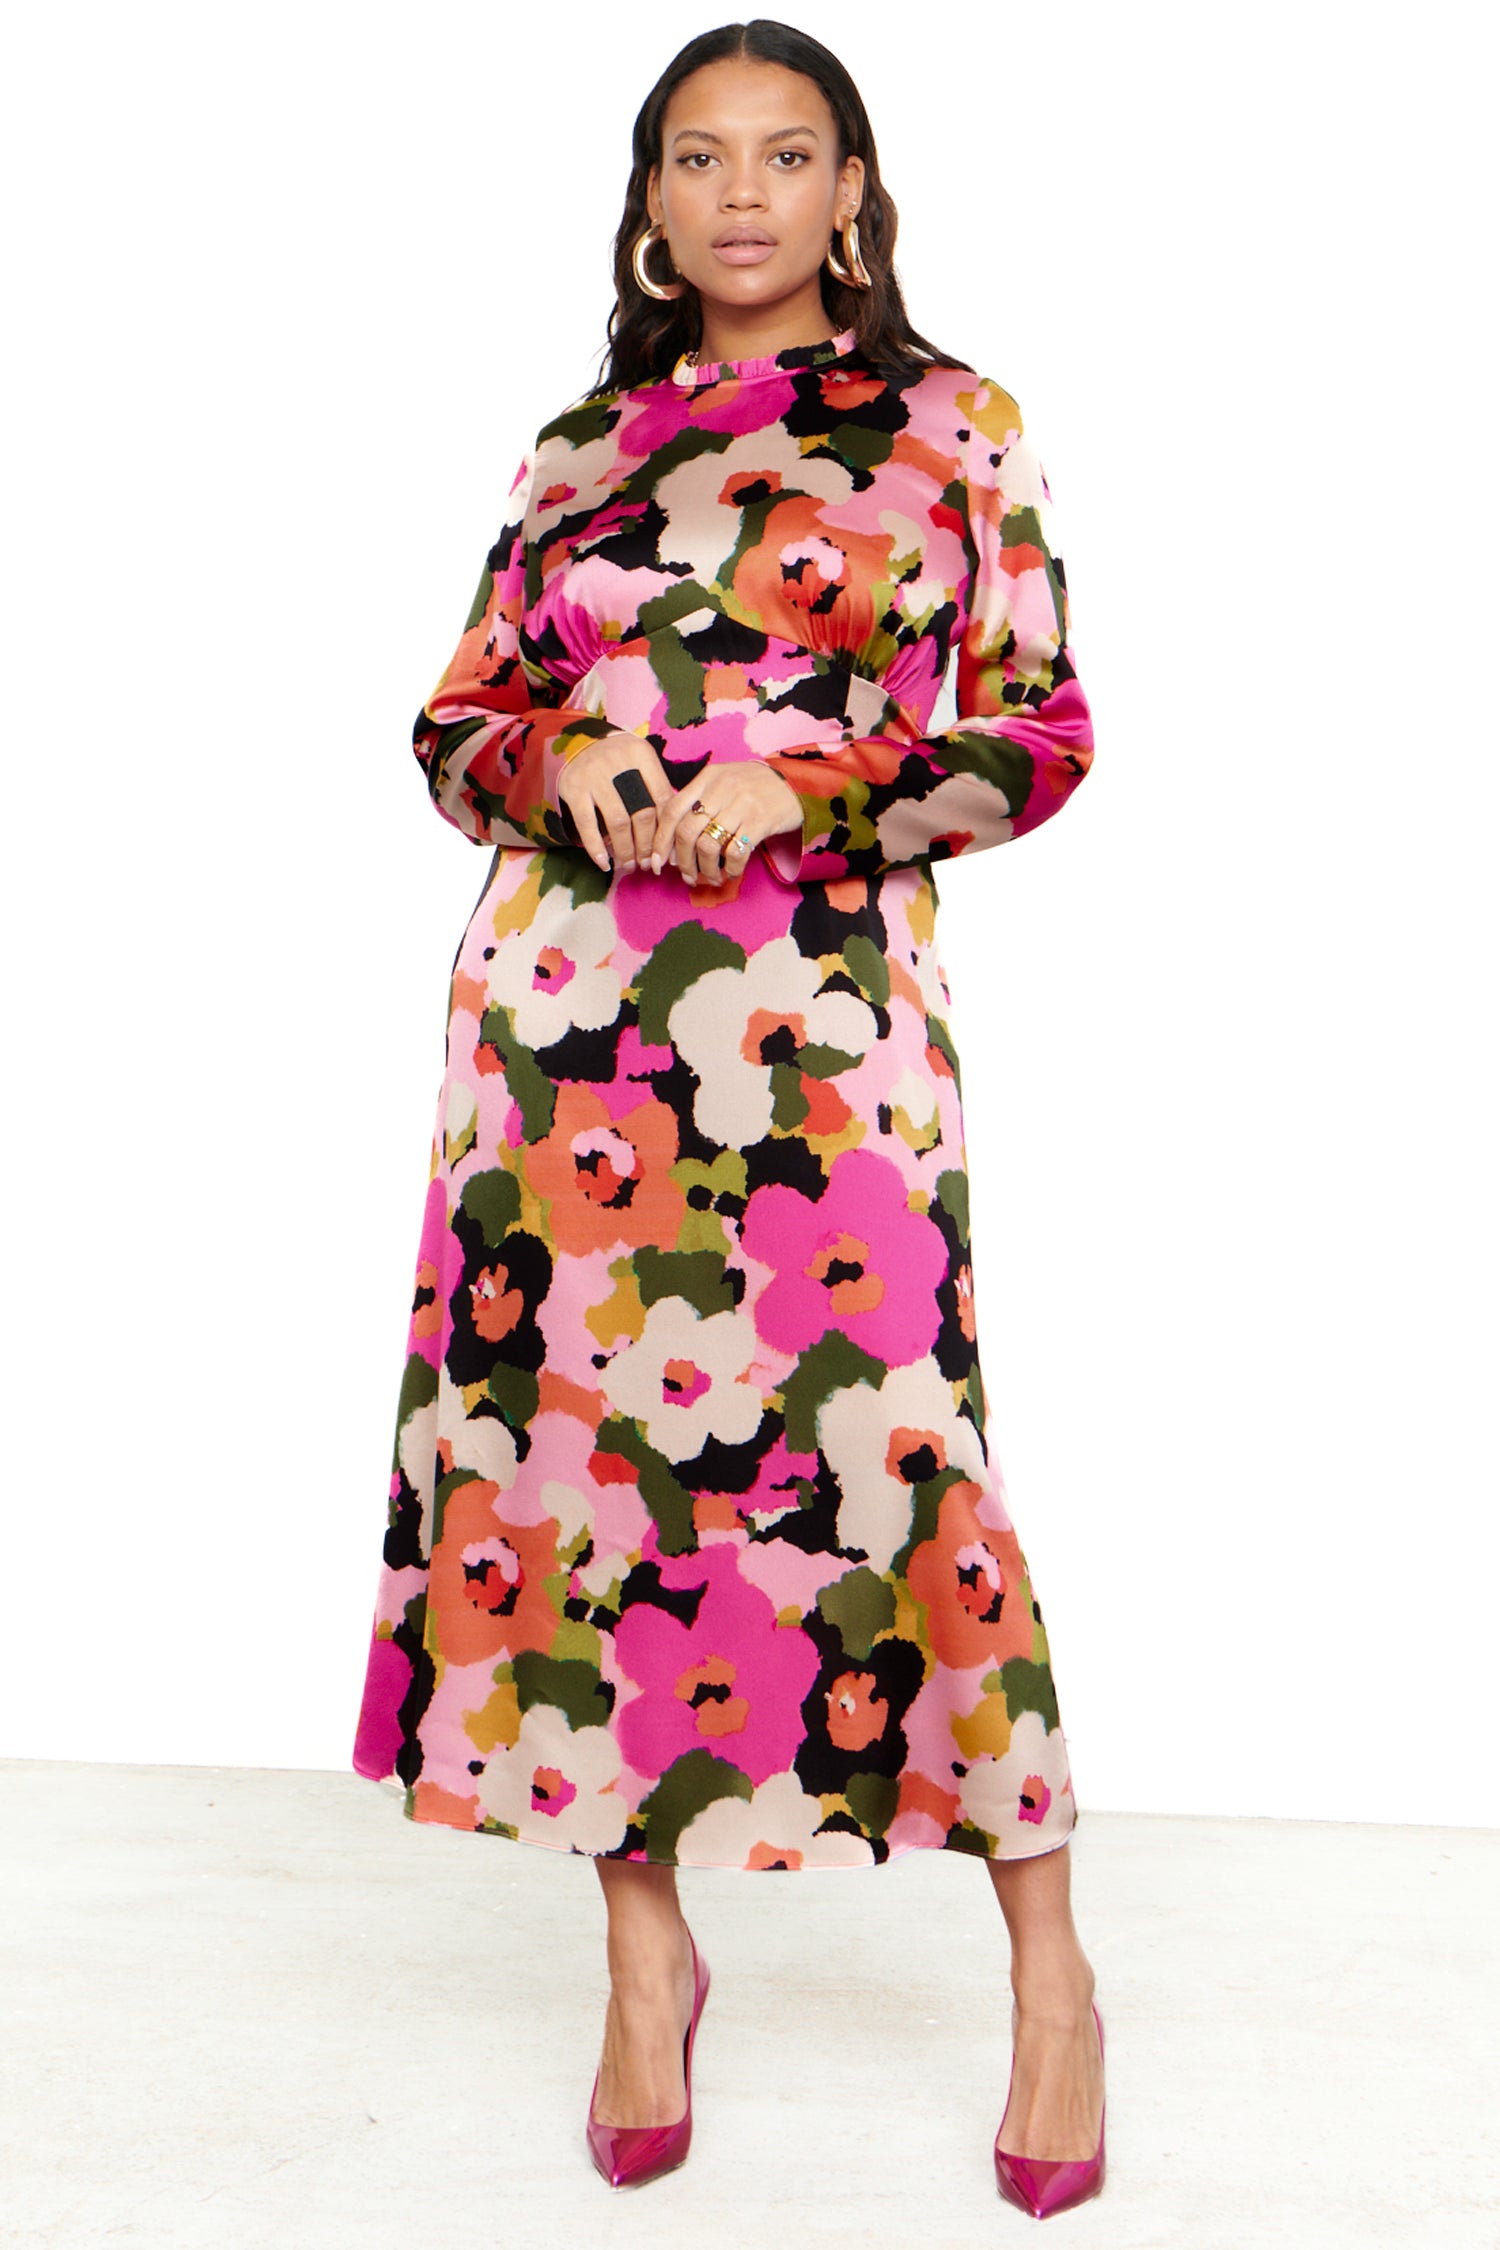 Model wearing Winter Blossom Beau Dress standing facing the camera